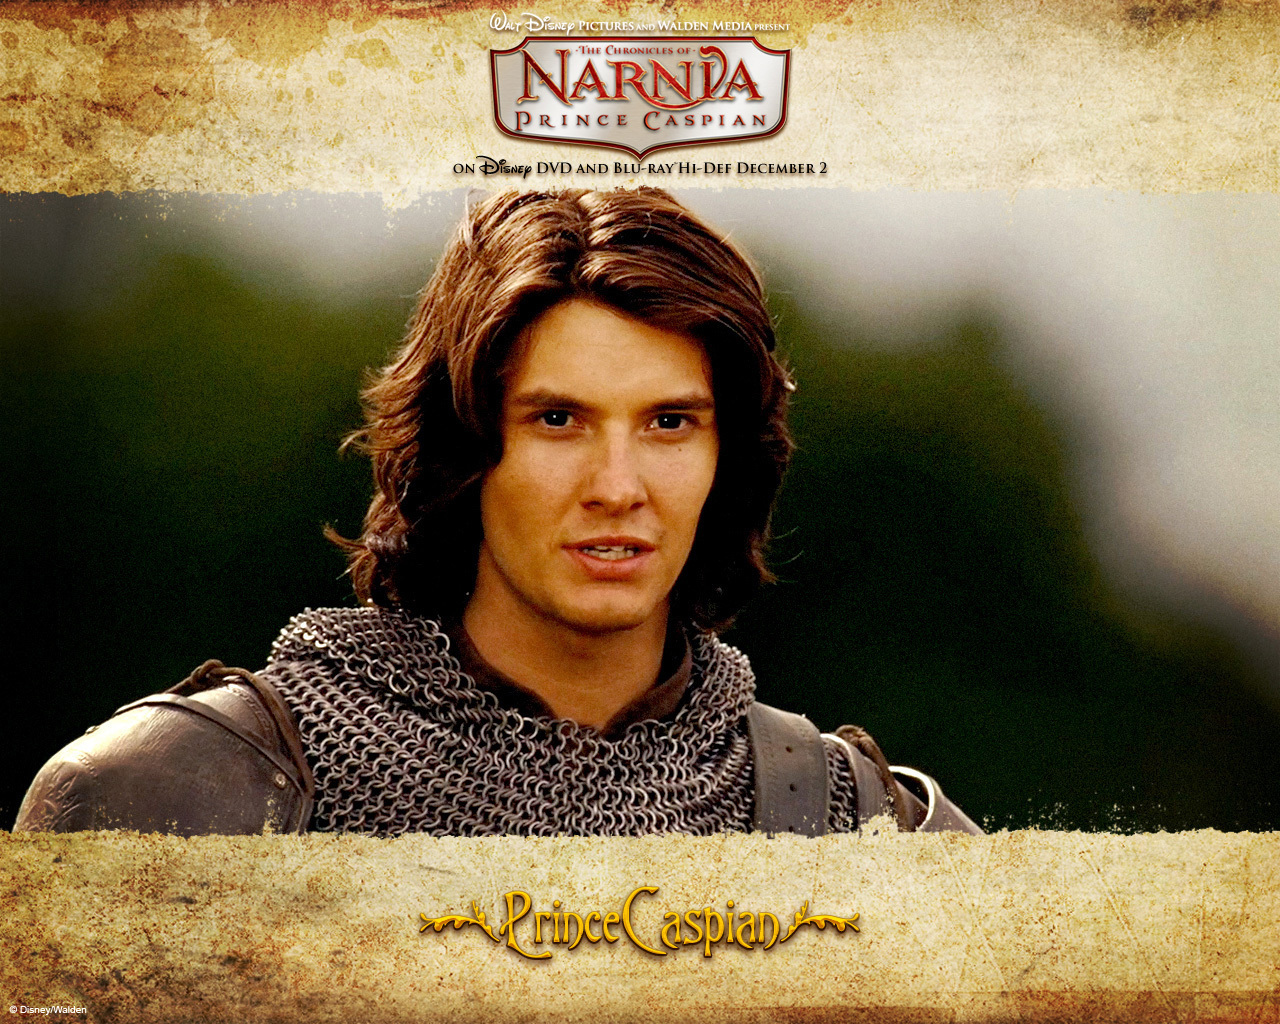 Prince Caspian Chronicles Of Narnia Wallpaper